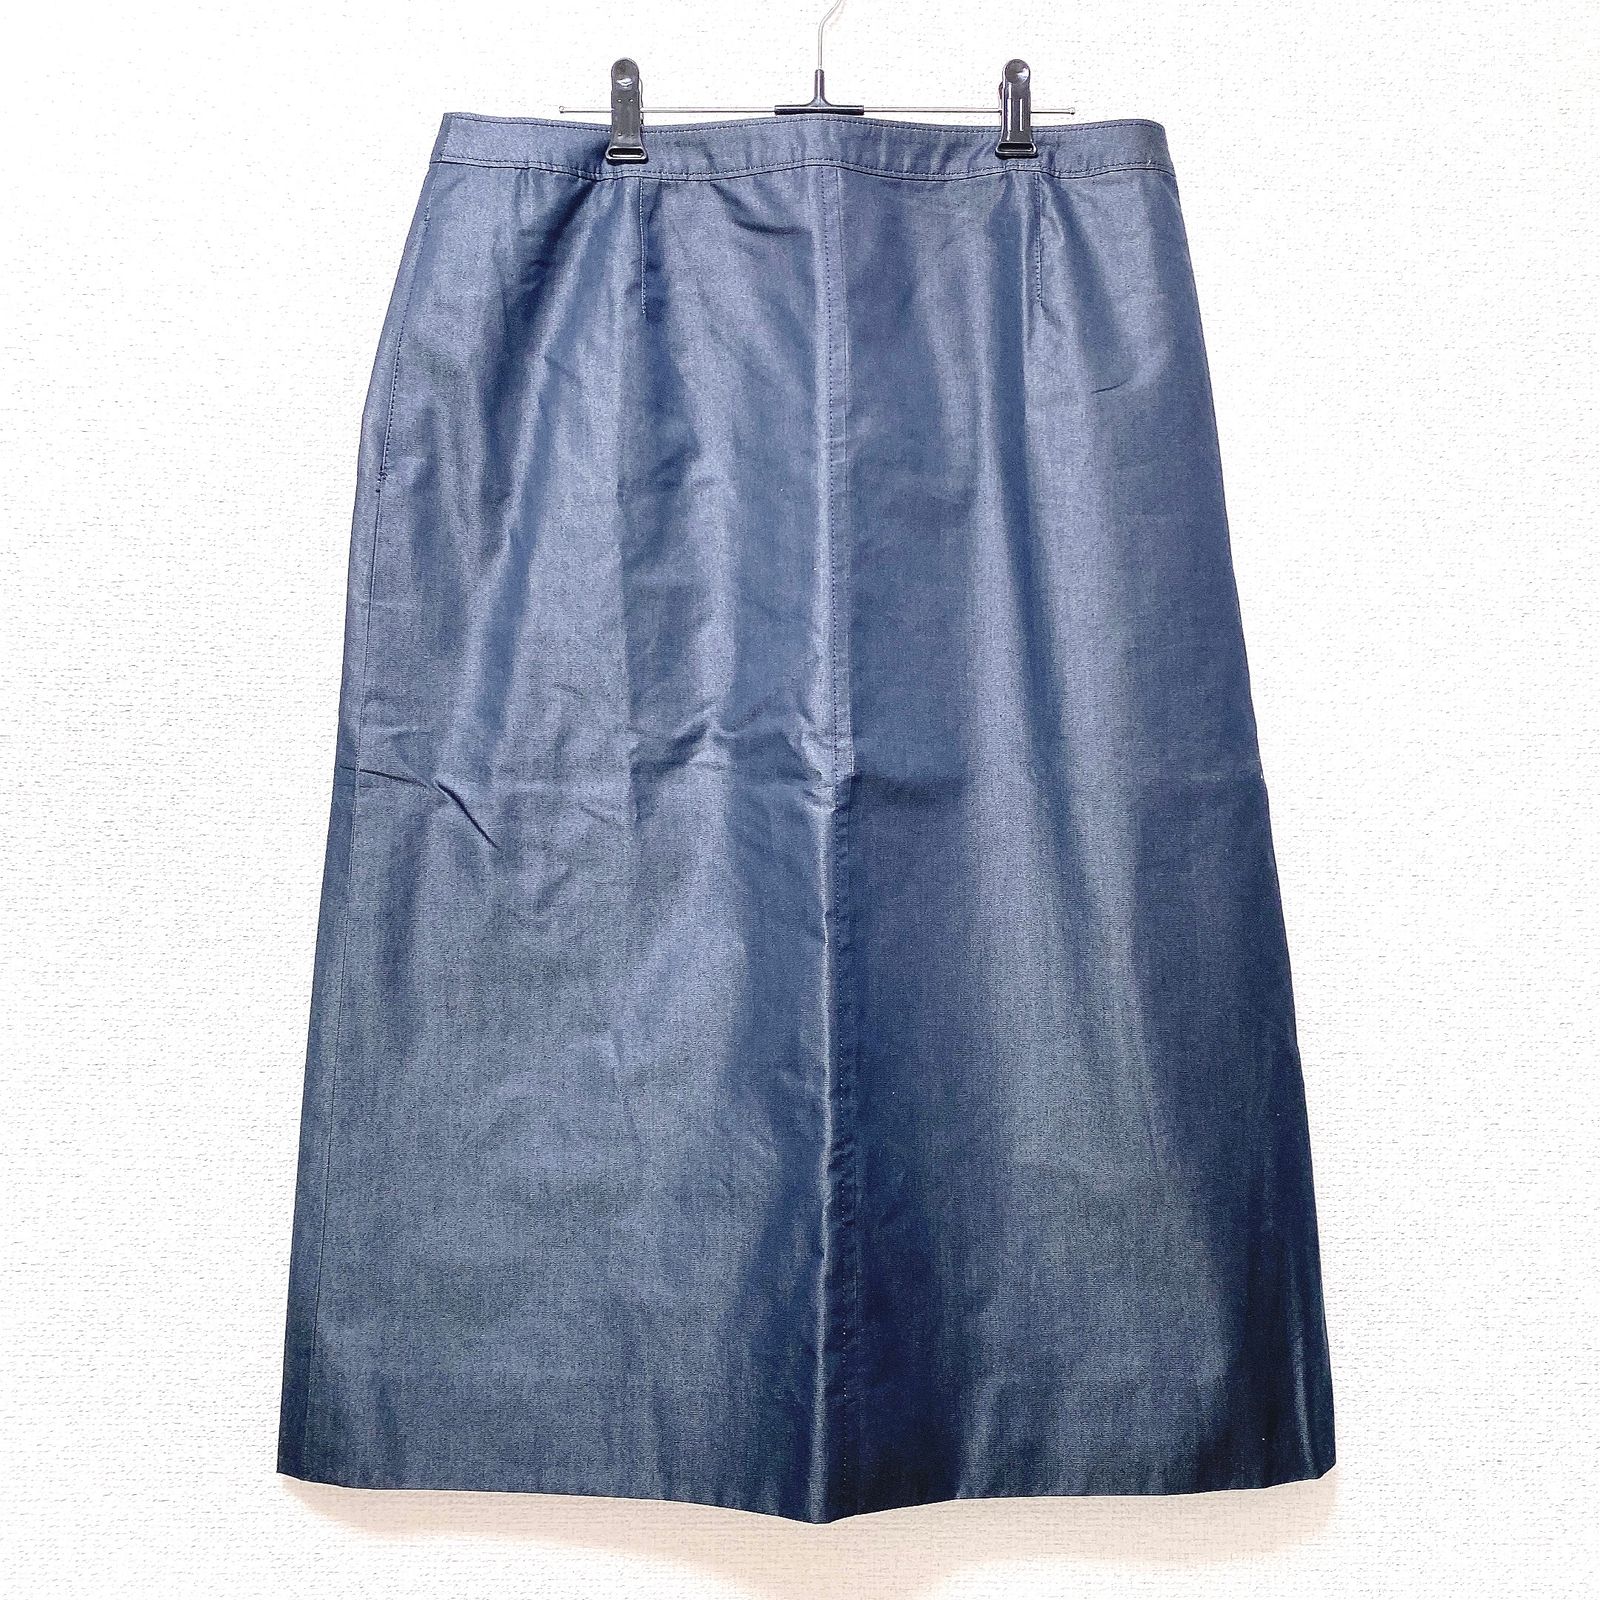 W010】カルヴェン スカート シルク混 ブラック〜ネイビー系 46サイズ